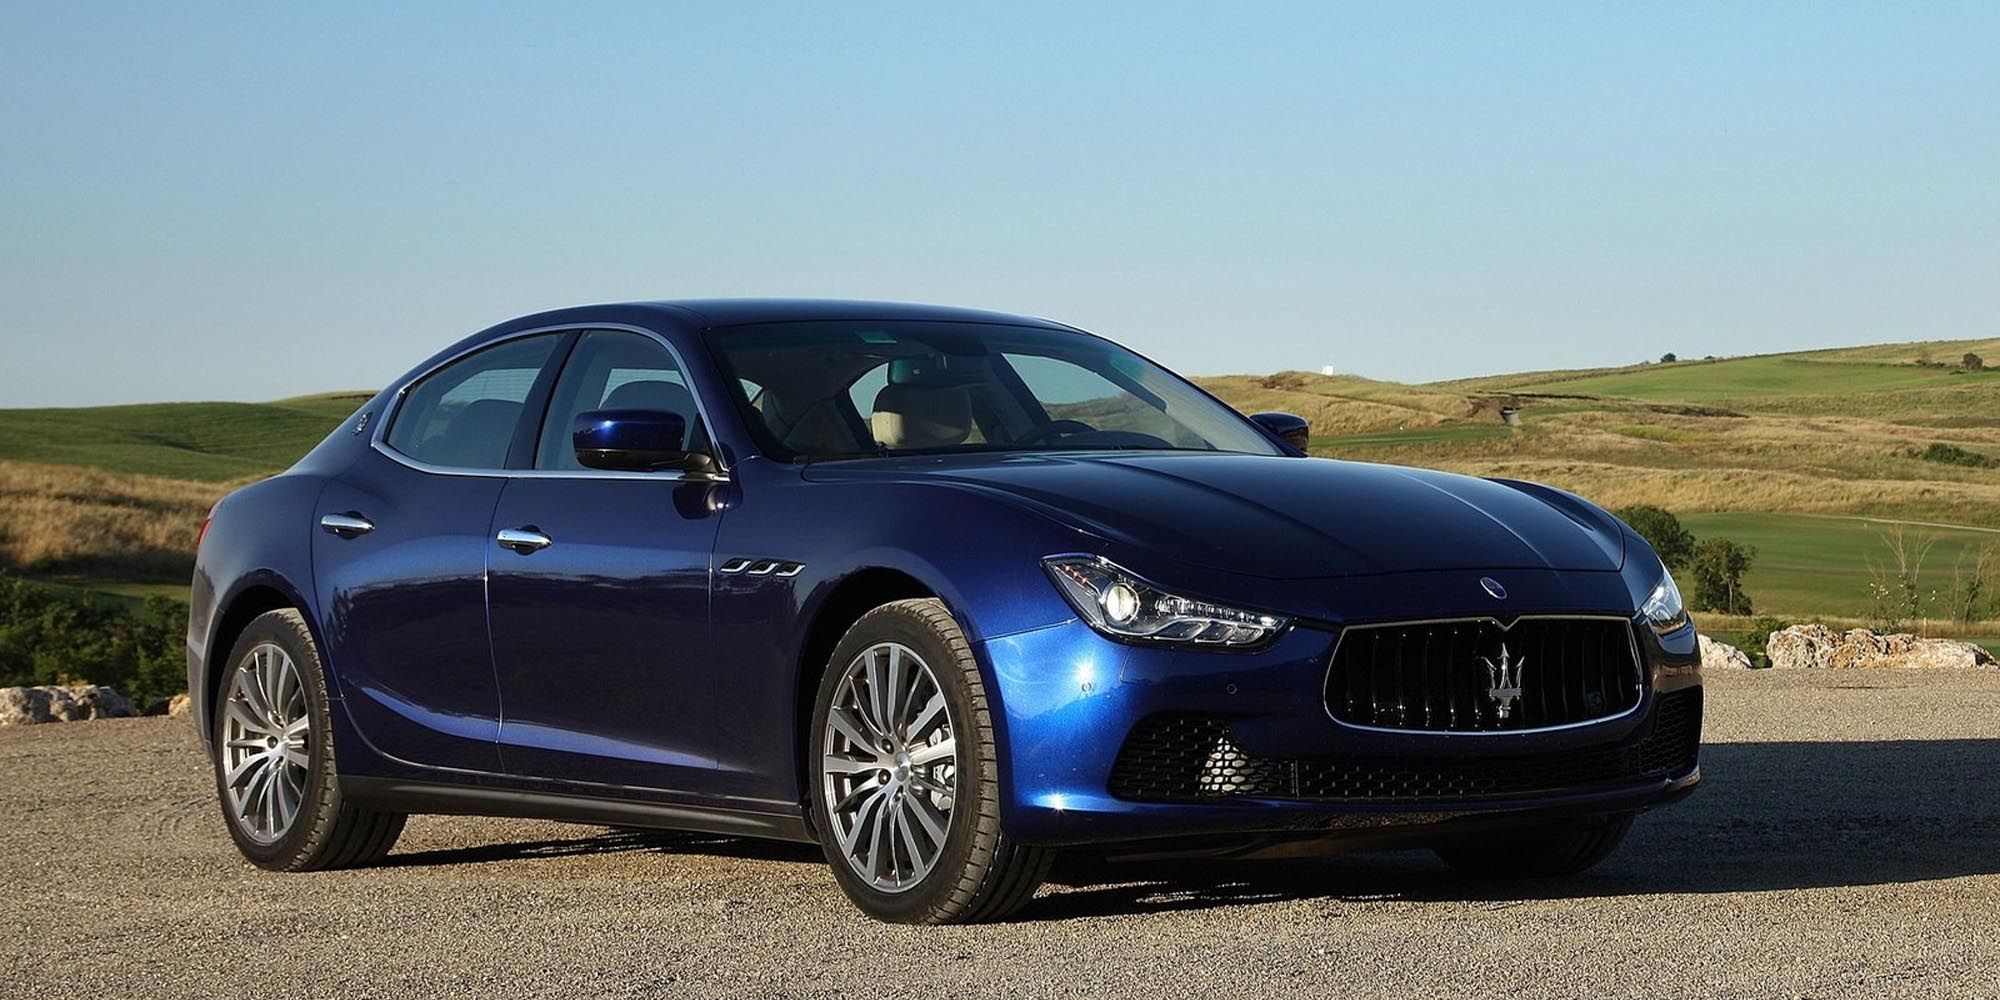 The Maserati Ghibli in blue